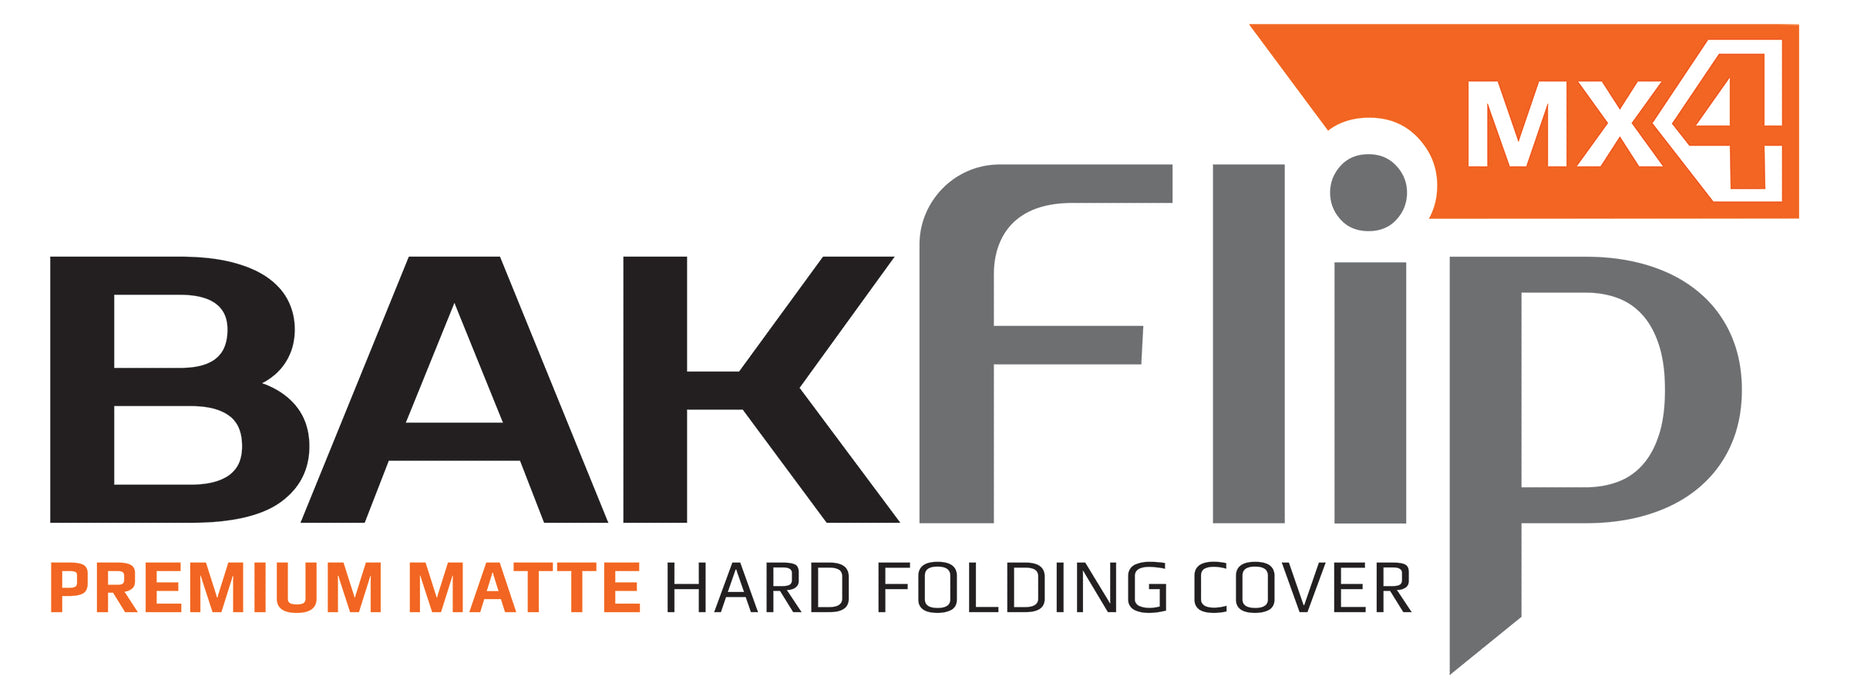 BAK BAKFlip MX4 Hard Folding Truck Bed Tonneau Cover MATTE FINISH Fits 2015-2018 GM Silverado,Sierra & 2019 Legacy/Limited  6.7ft Bed (2014 1500 Only, 2015-2019 1500,2500,3500) Model 448121